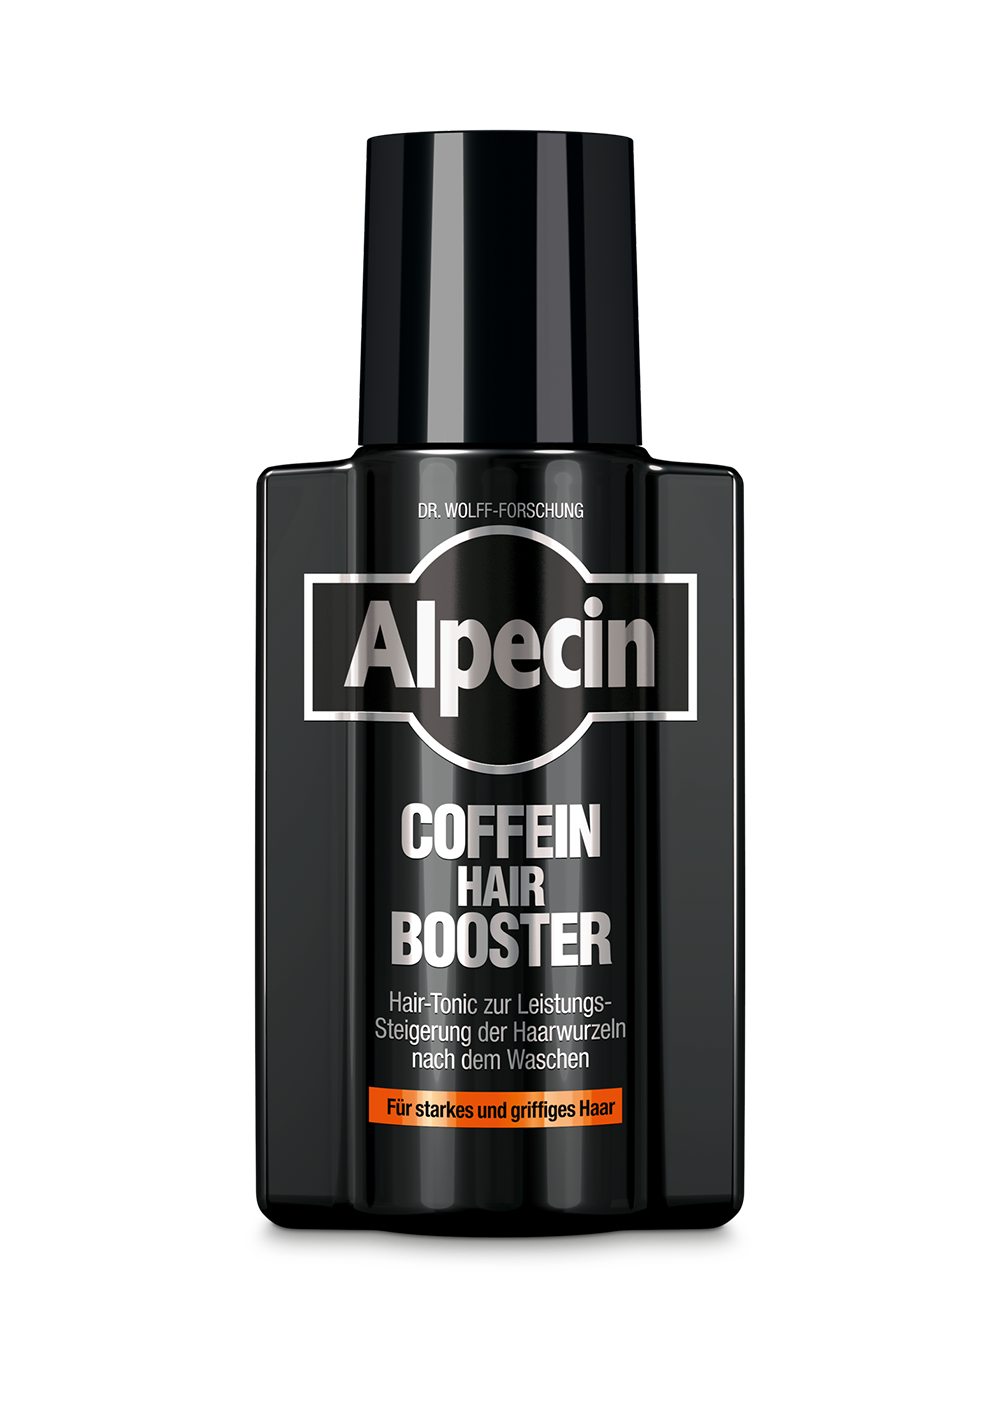 Alpecin Coffein Hair Booster